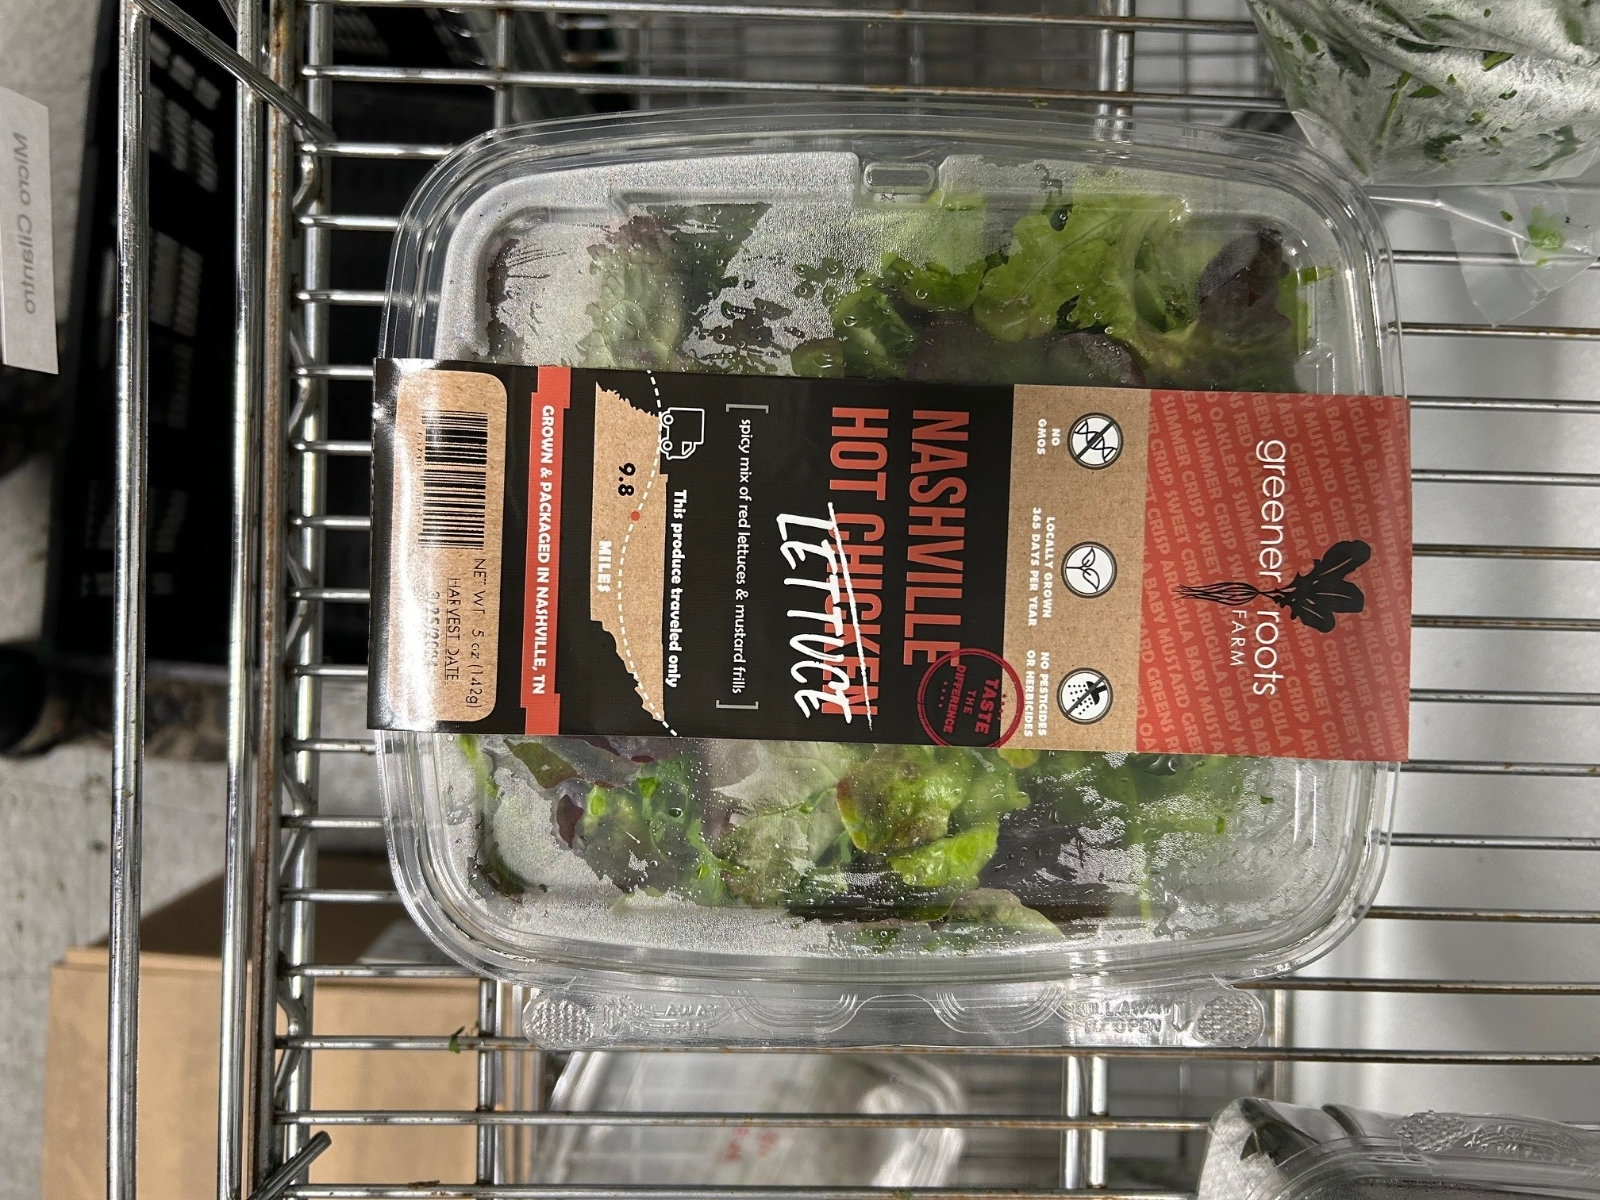 nashville-hot-lettuce-5-oz